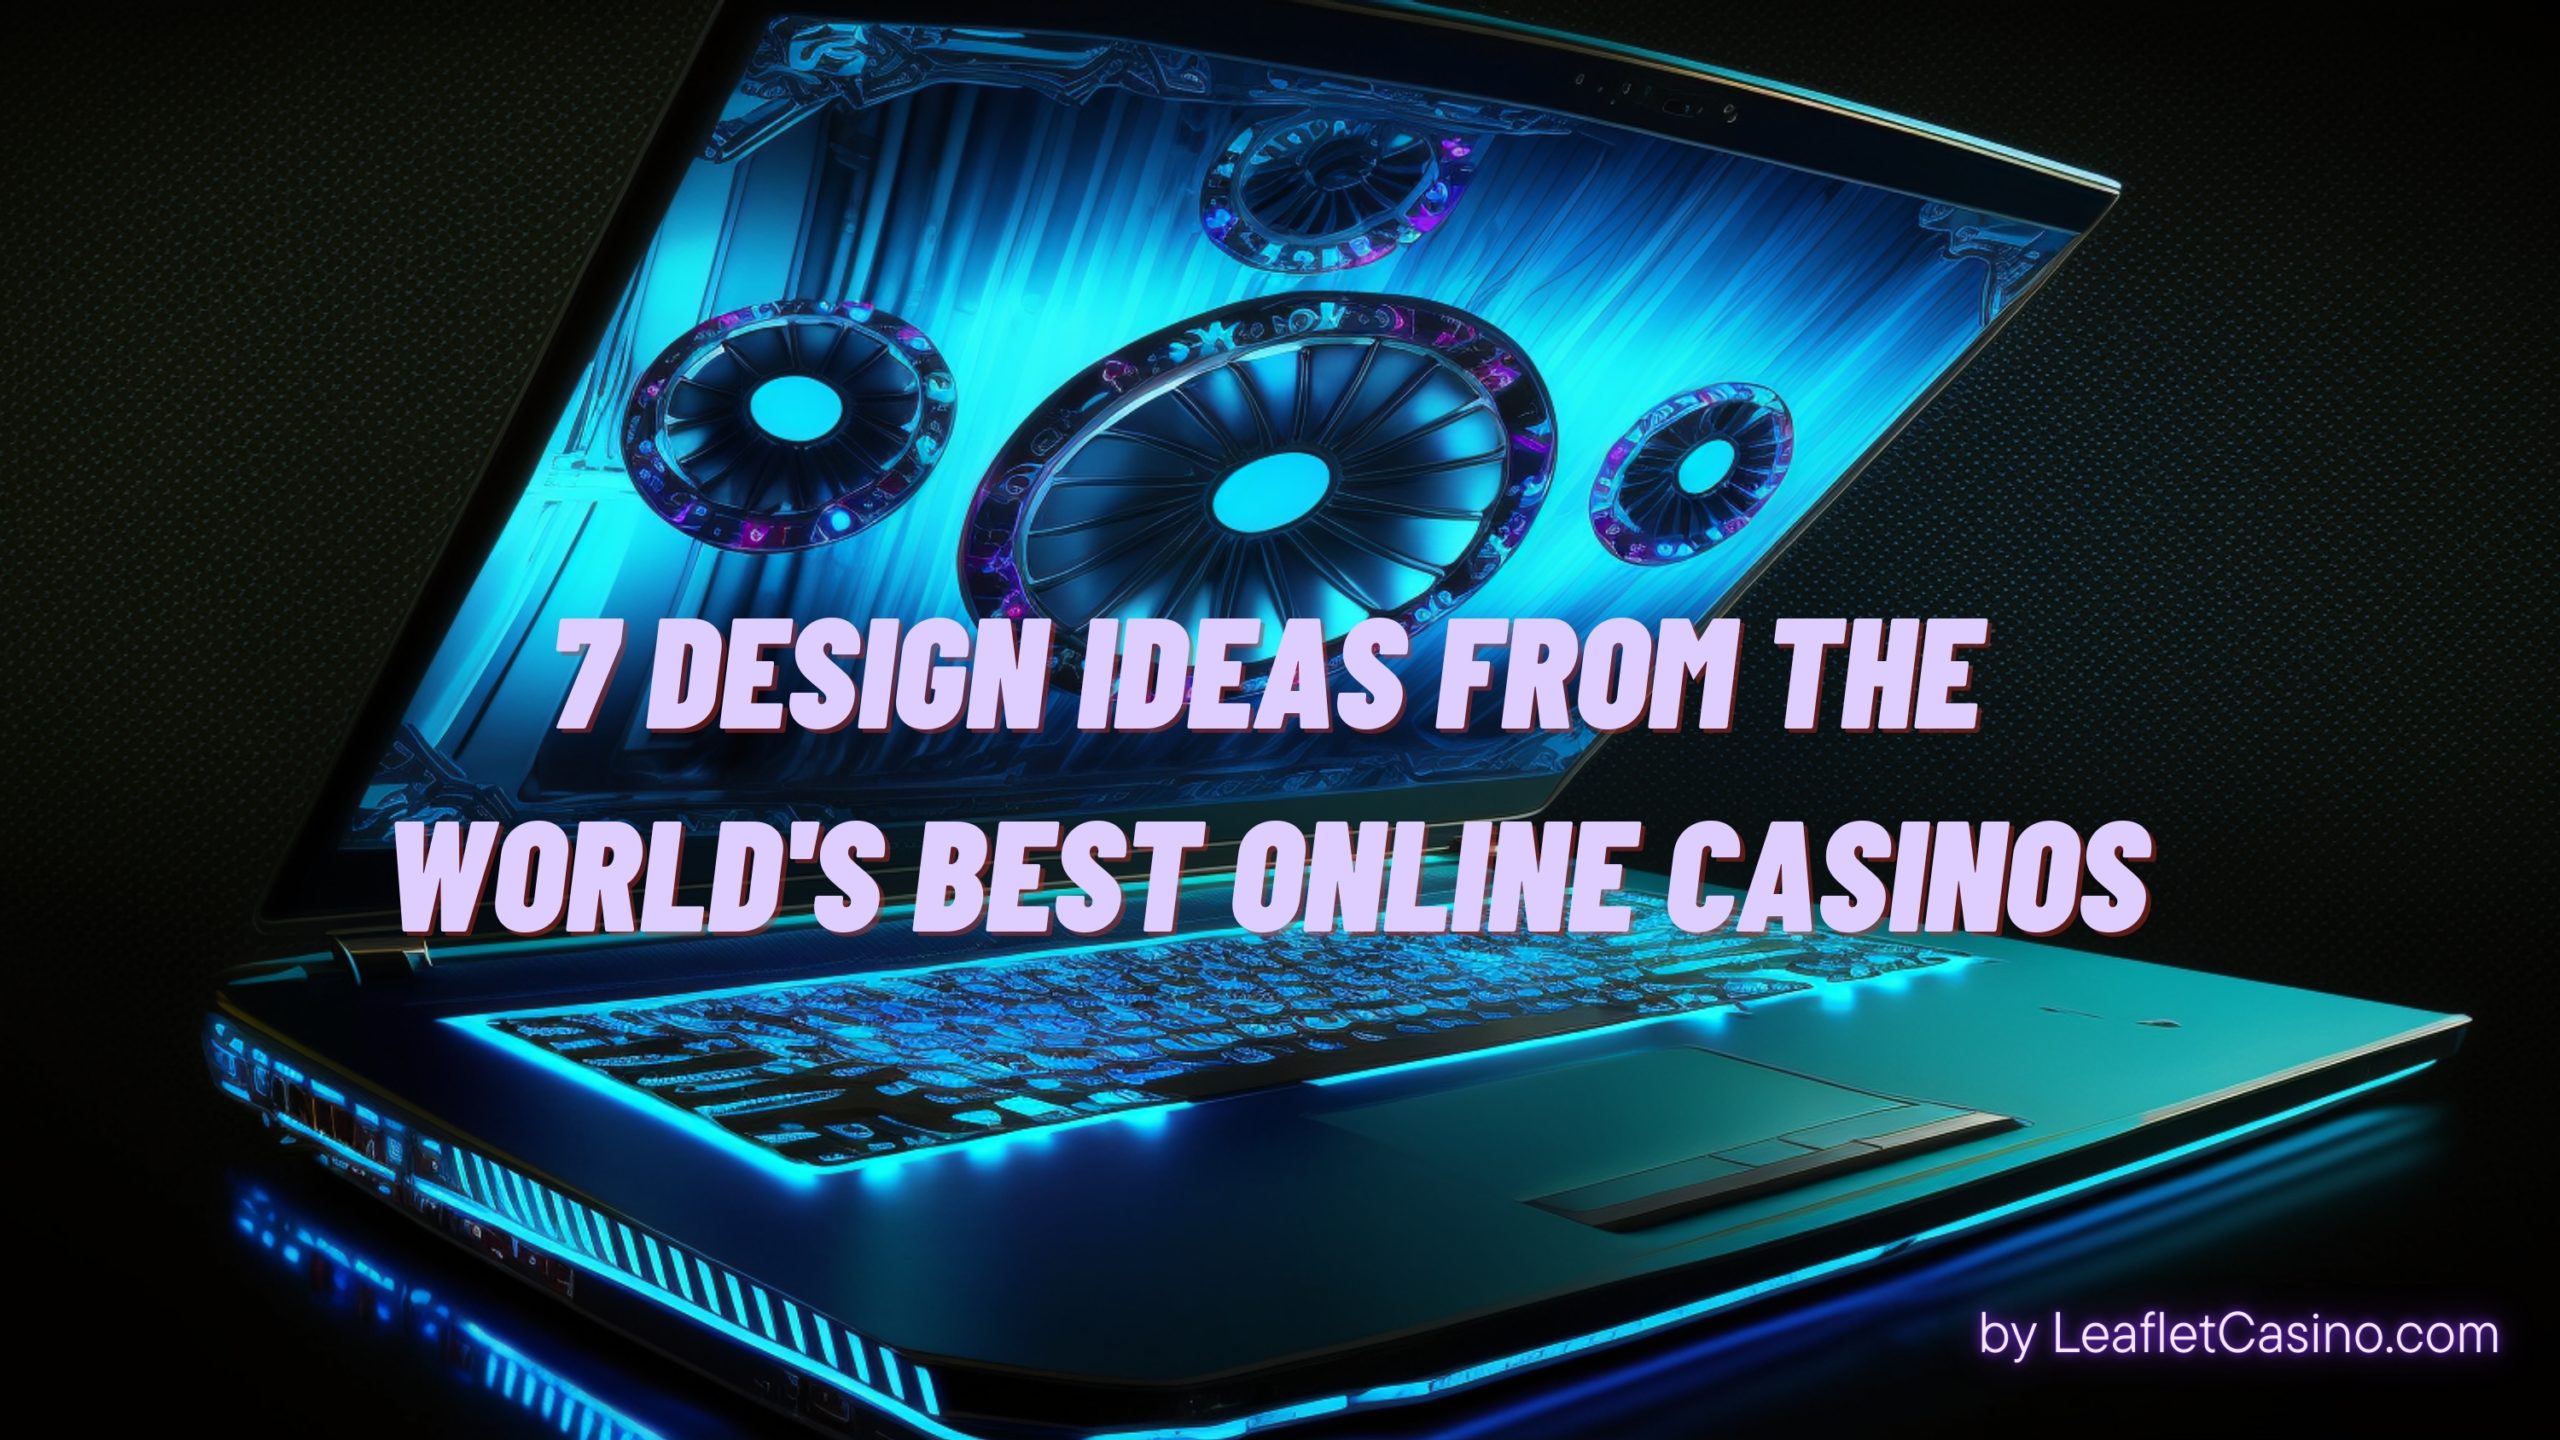 7 Design Ideas from the World’s Best Online Casinos